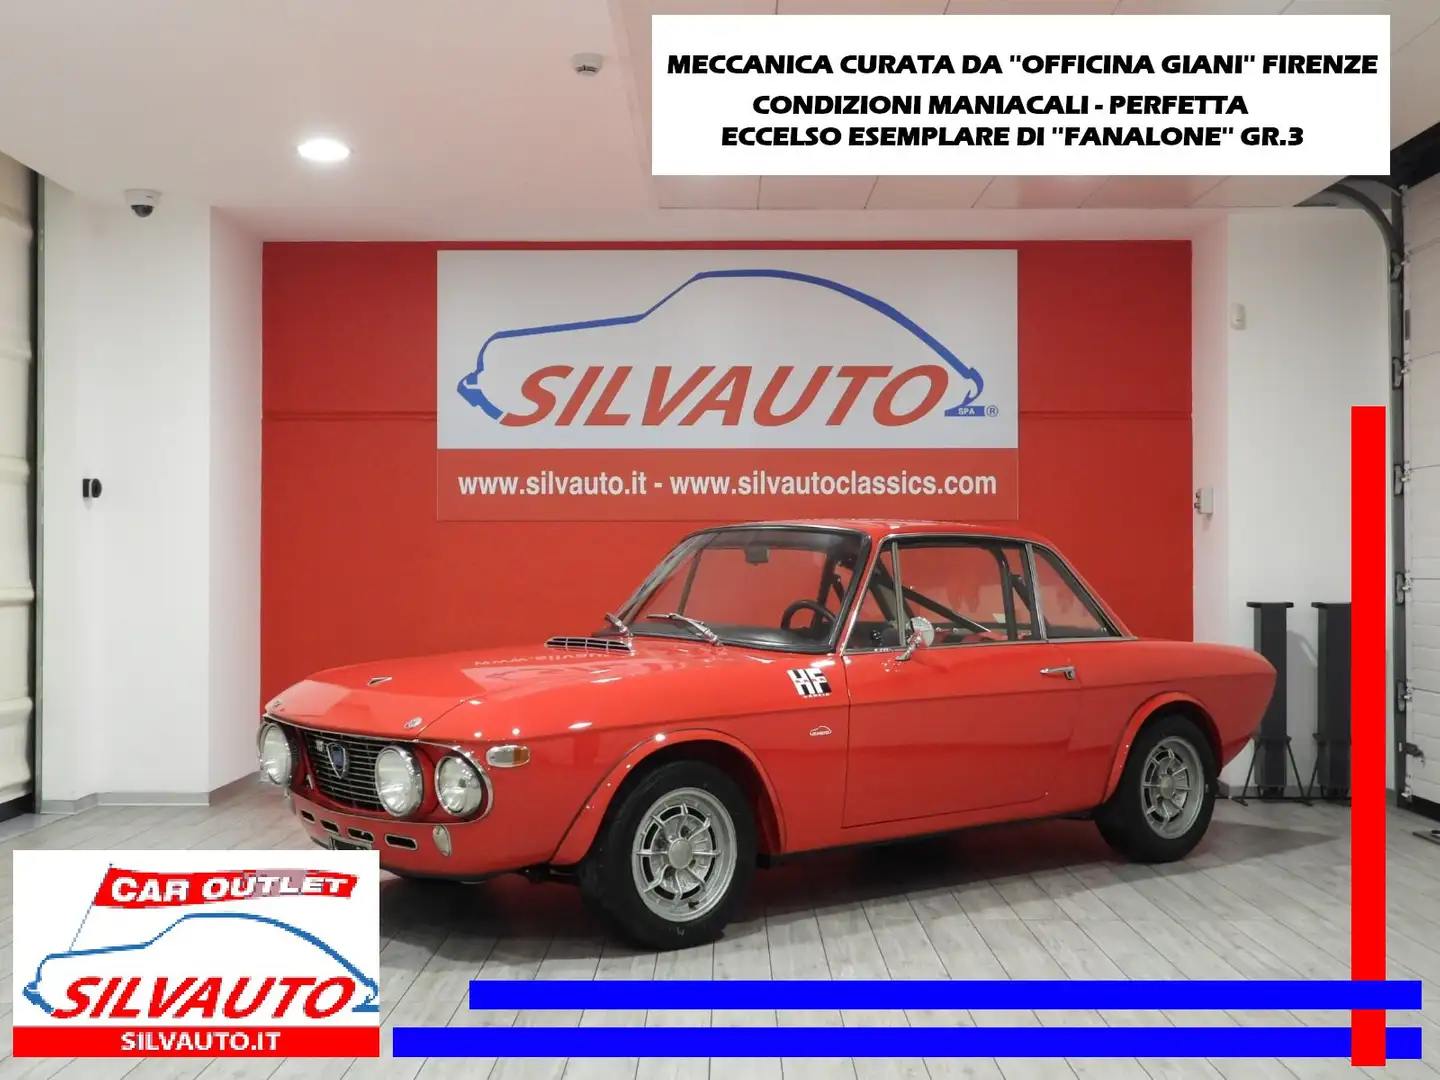 Lancia Fulvia RALLYE 1.6 HF T. 818.540 ”FANALONE” GR.3(1970) Red - 1